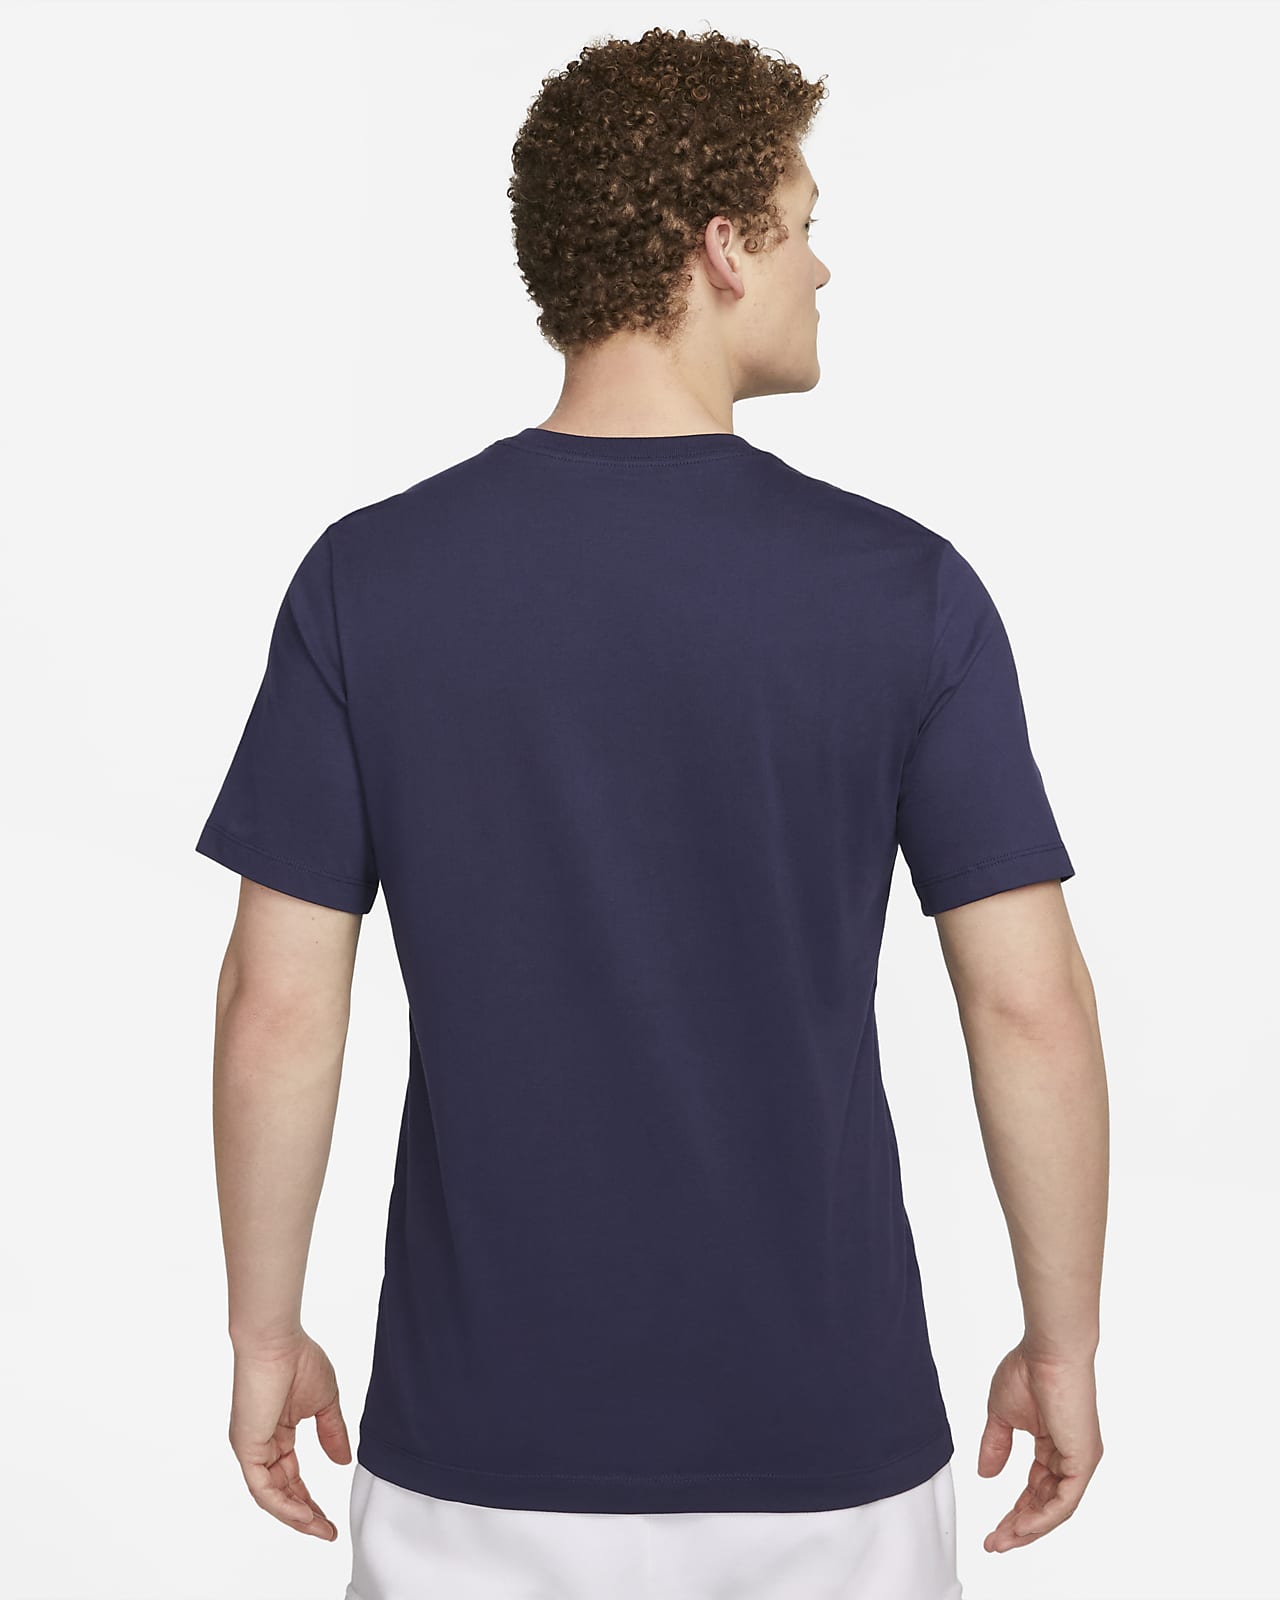 T-Shirts et Tops. Nike FR